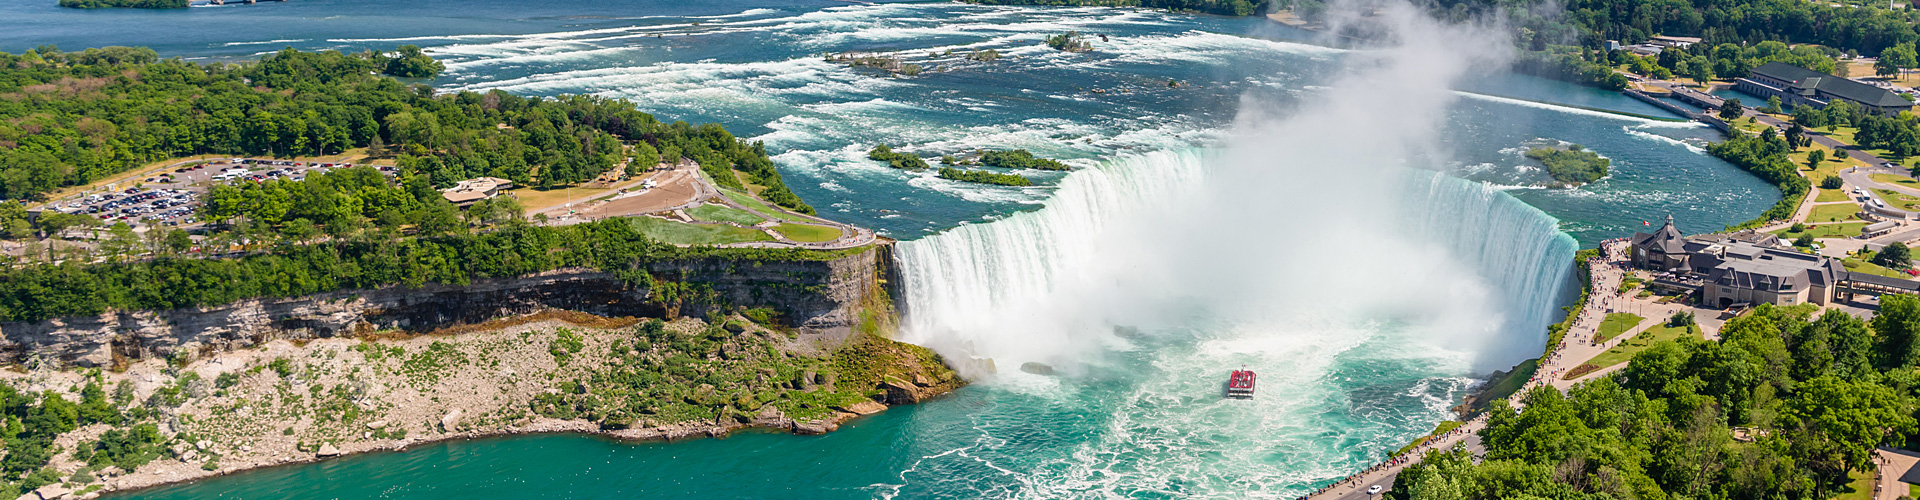 Niagara-Falls eastern discovery st top image